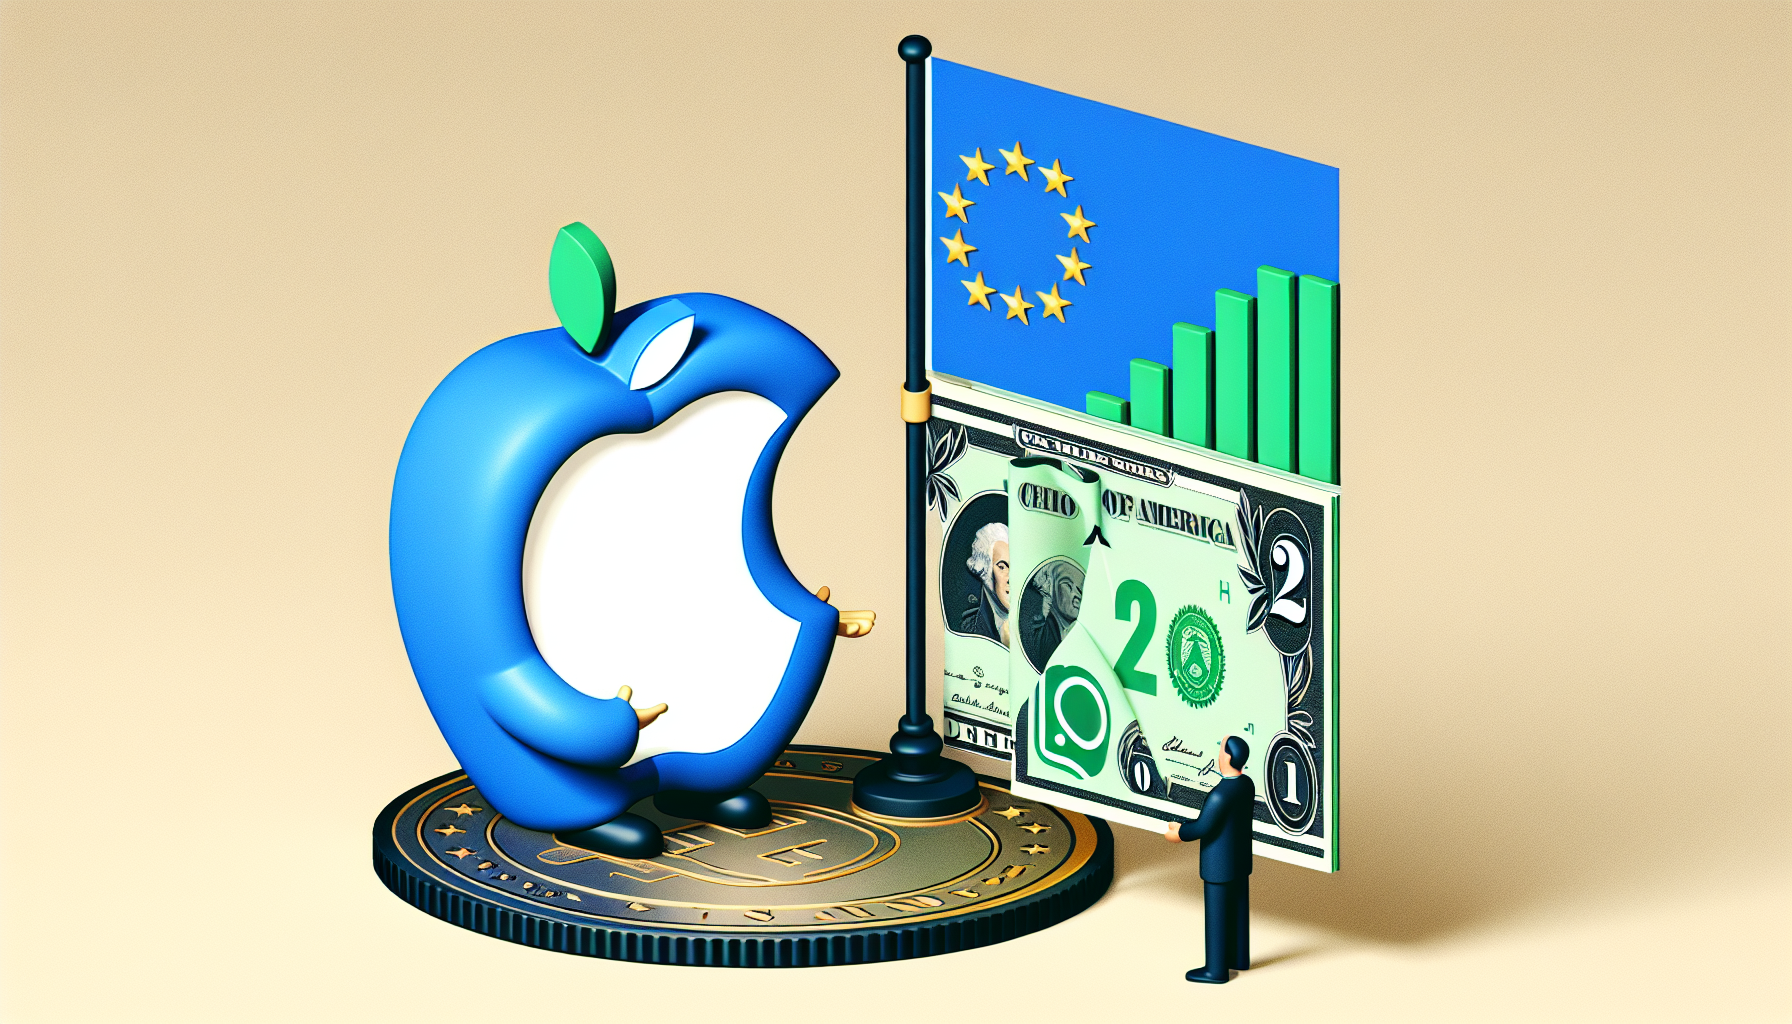 Apple Receives $2 Billion Fine from EU After Spotify's Antitrust Complaint